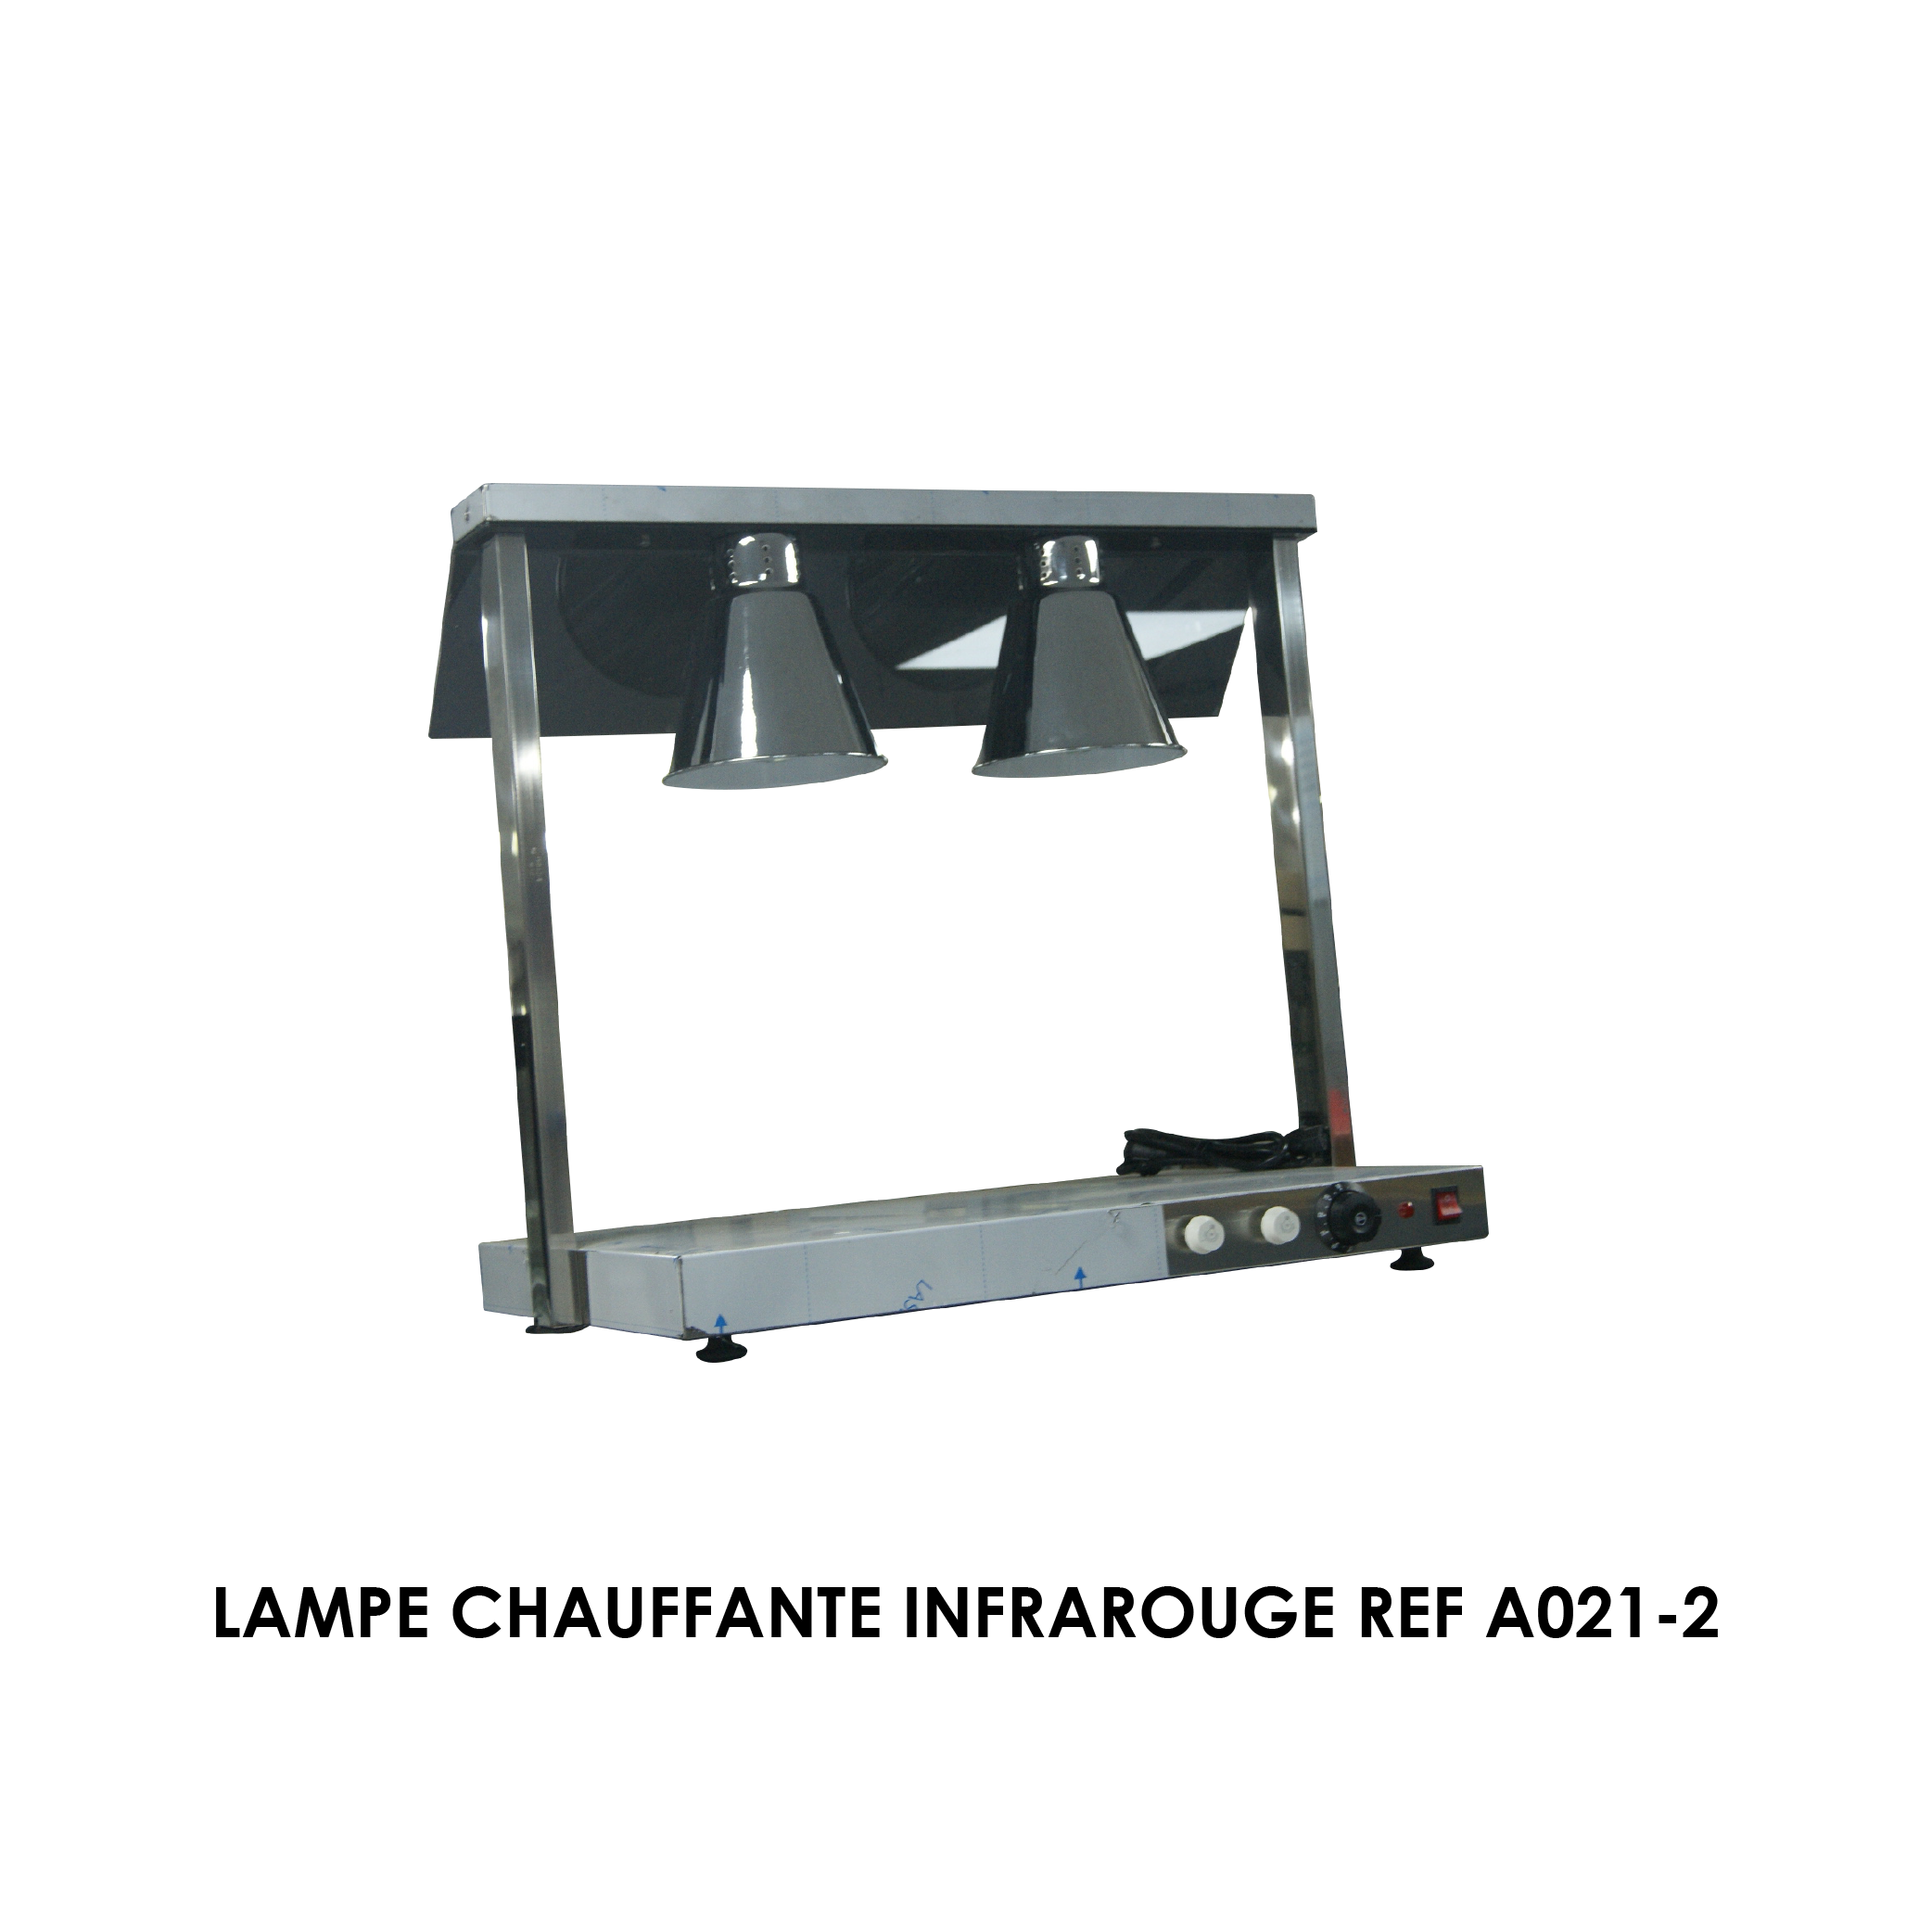 LAMPE CHAUFFANTE INFRAROUGE REF A021-2